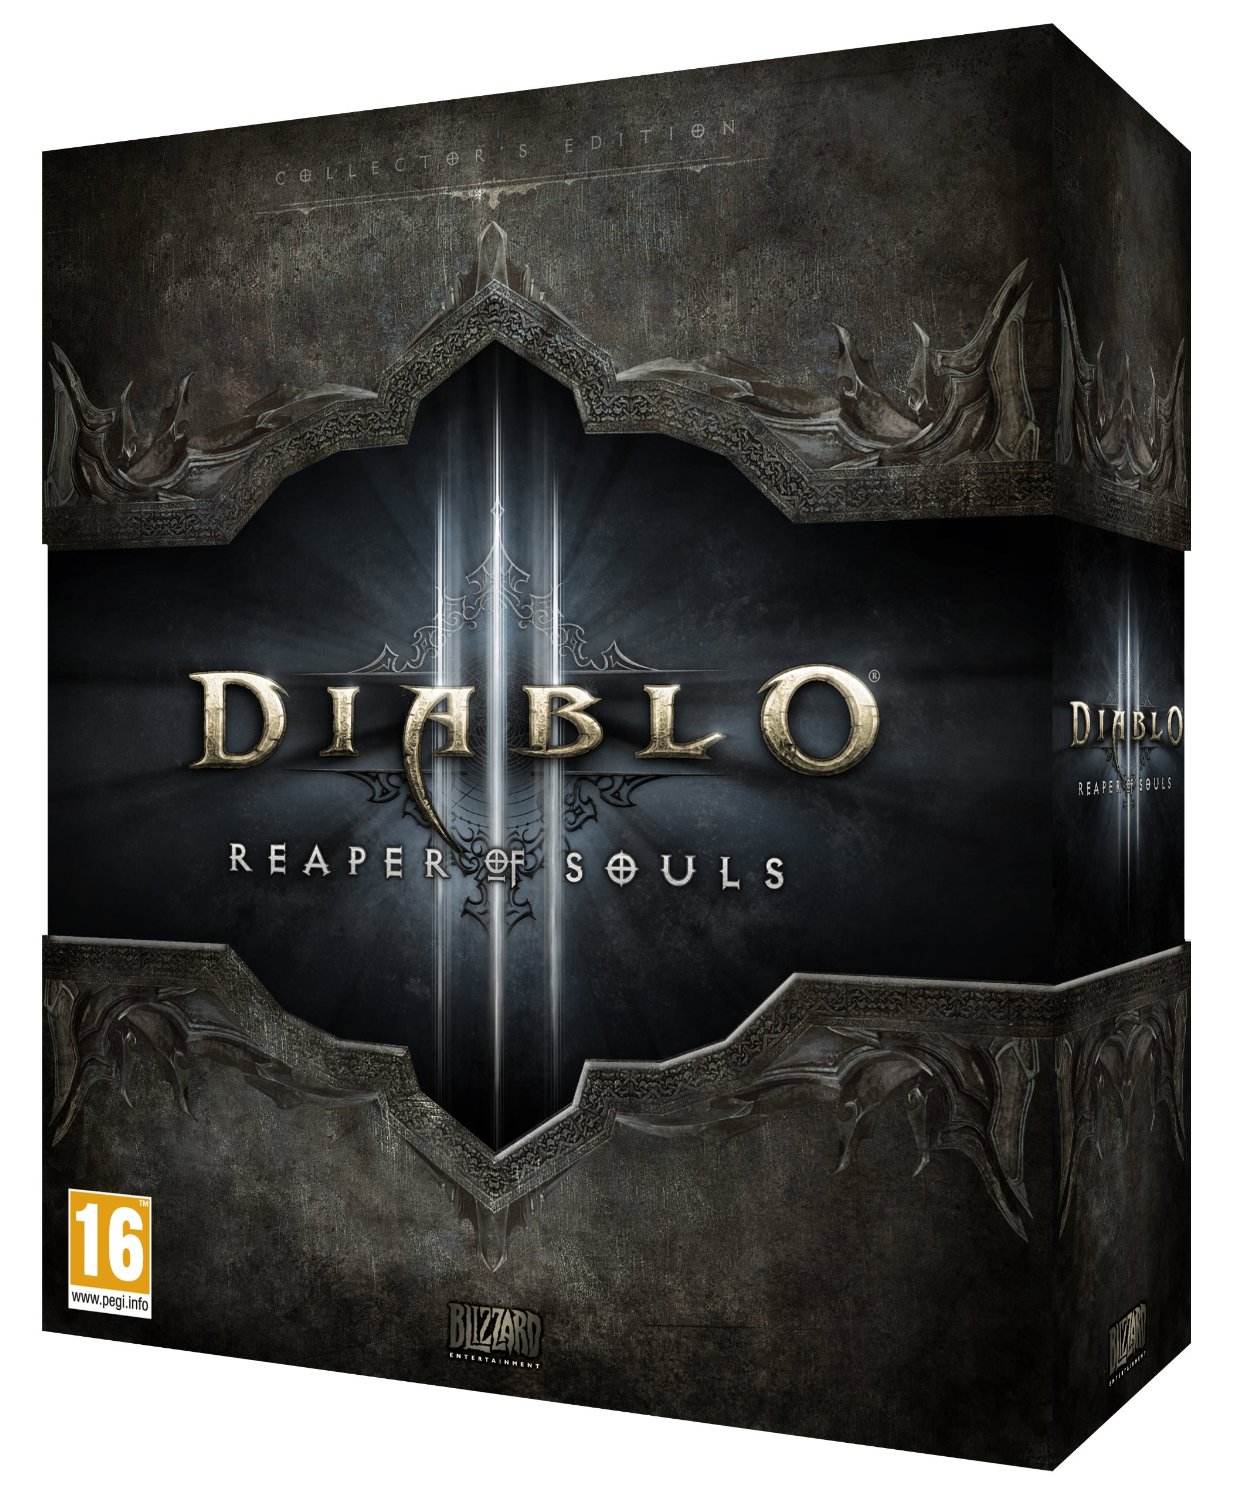 Diablo III - Reaper of Souls CD Key+ Crack PC Game Free Download